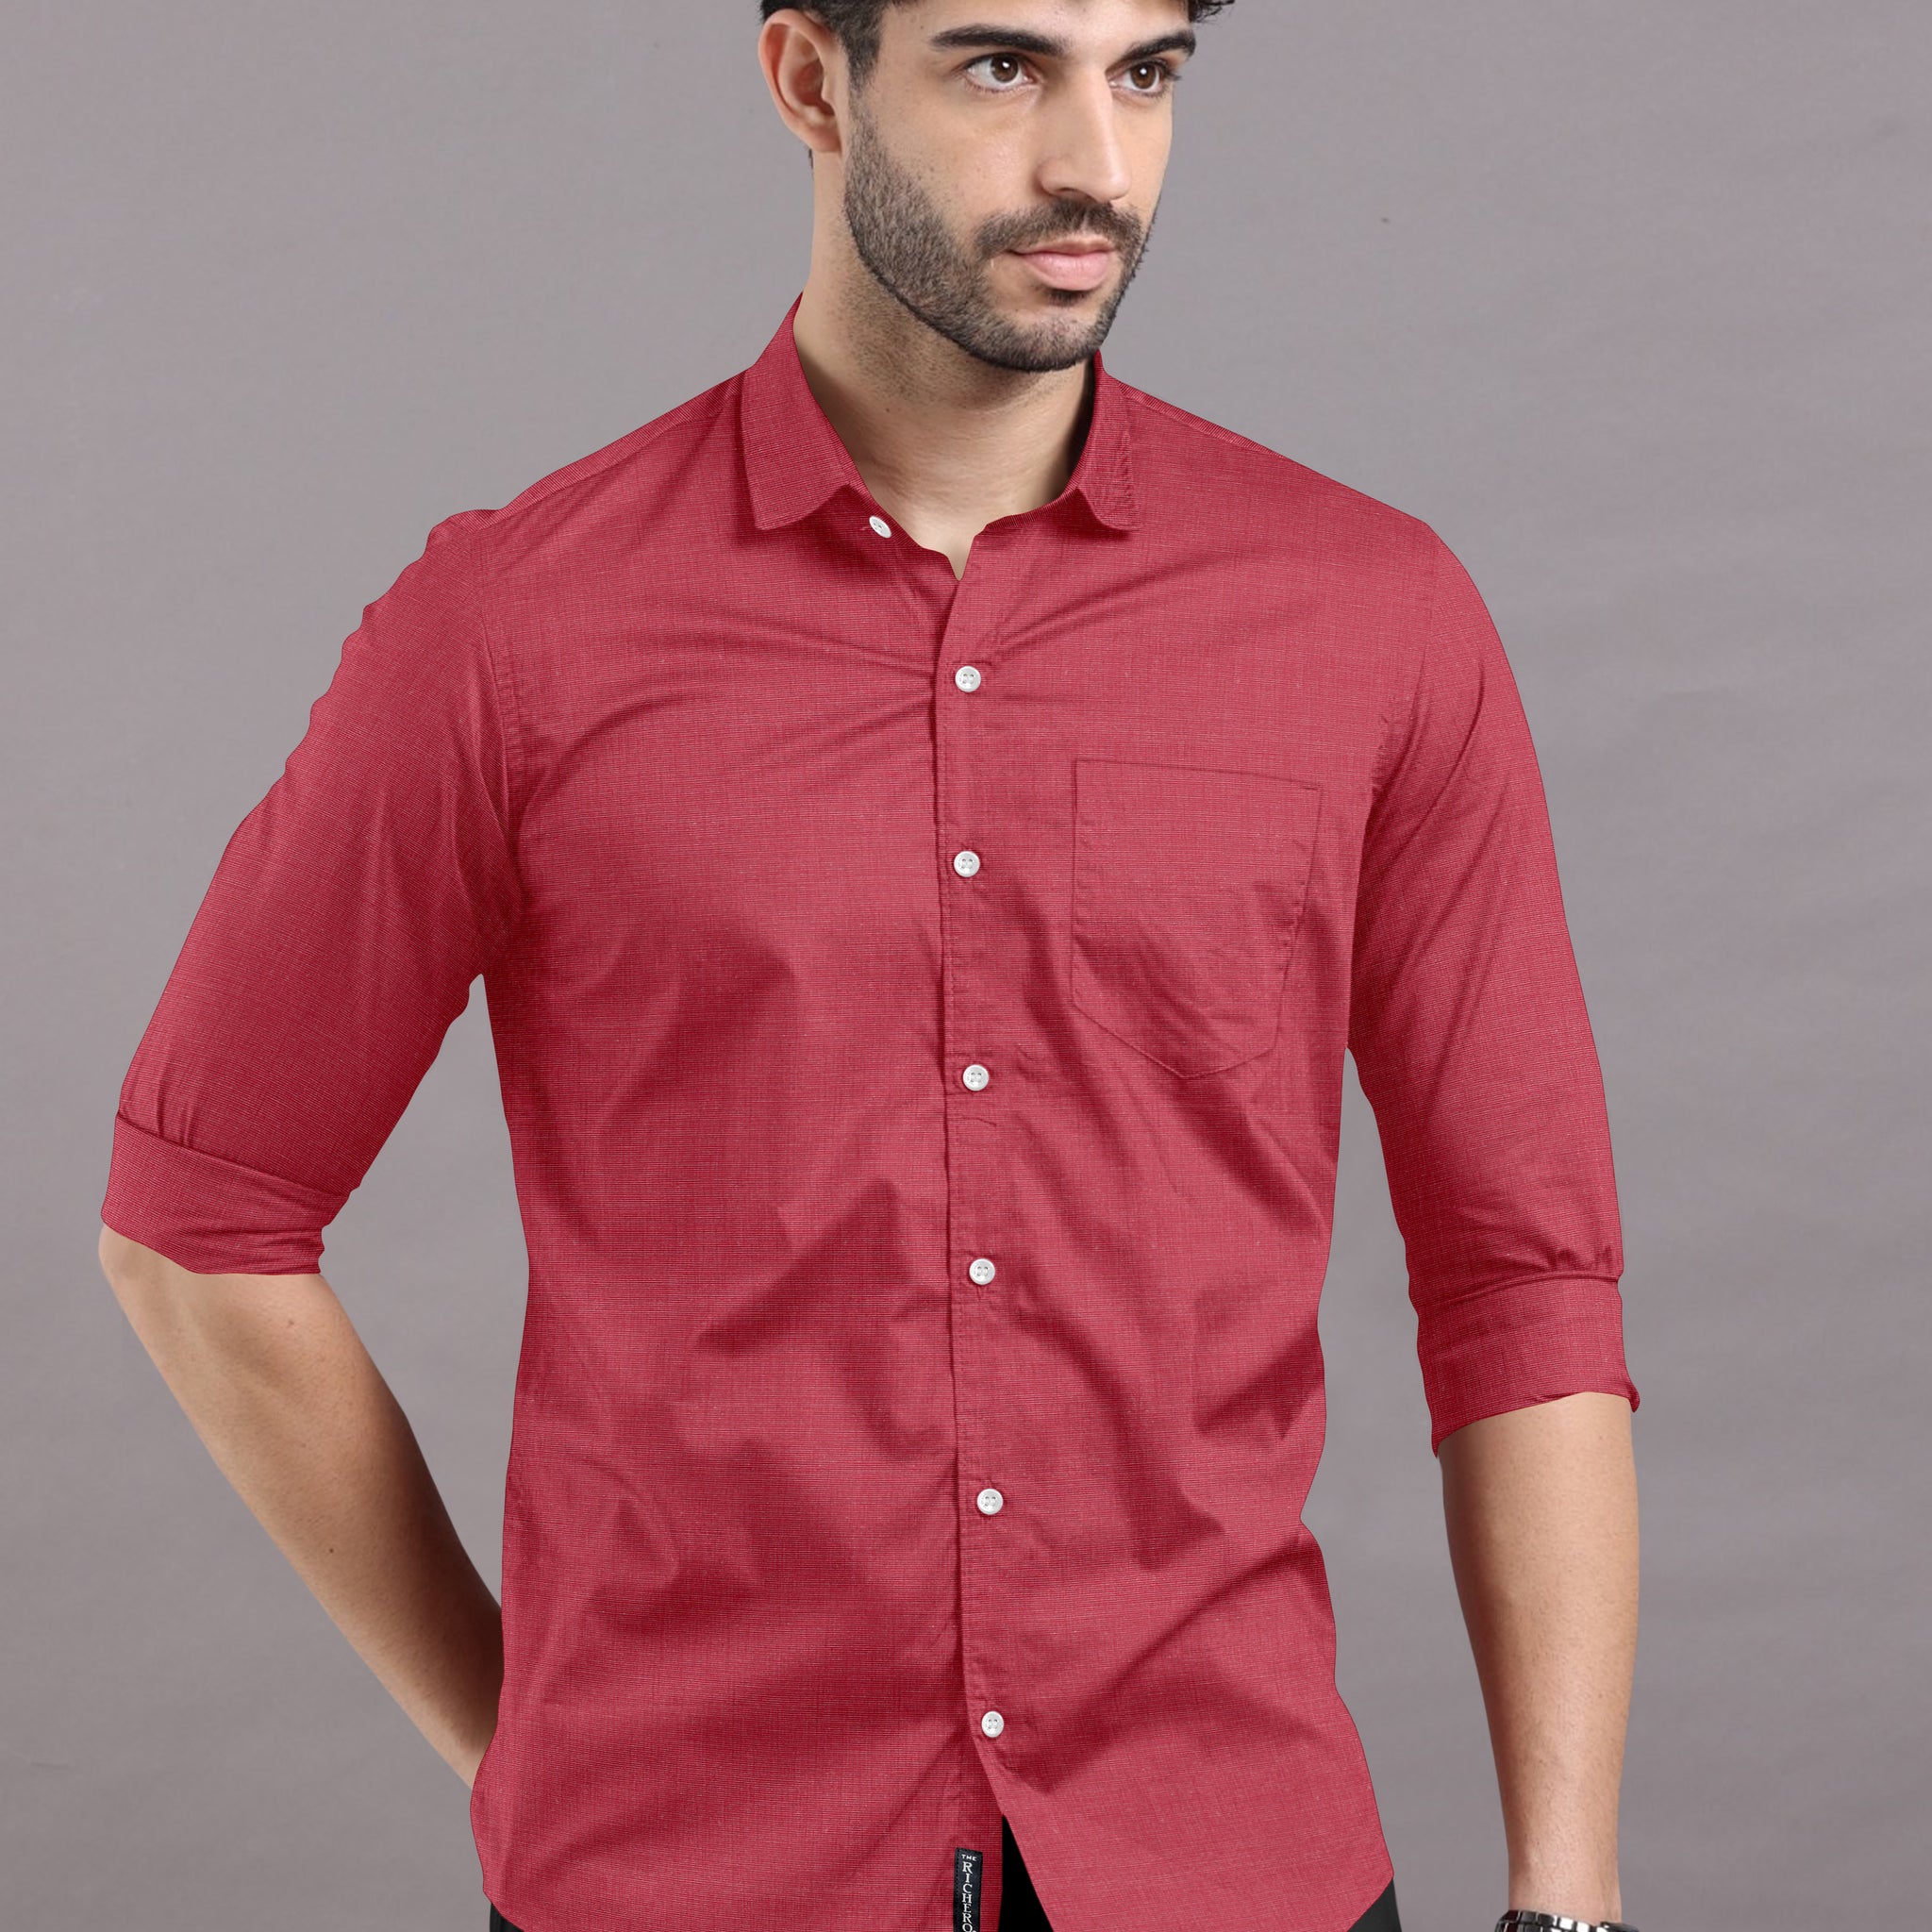 Plain Coral Red Shirt